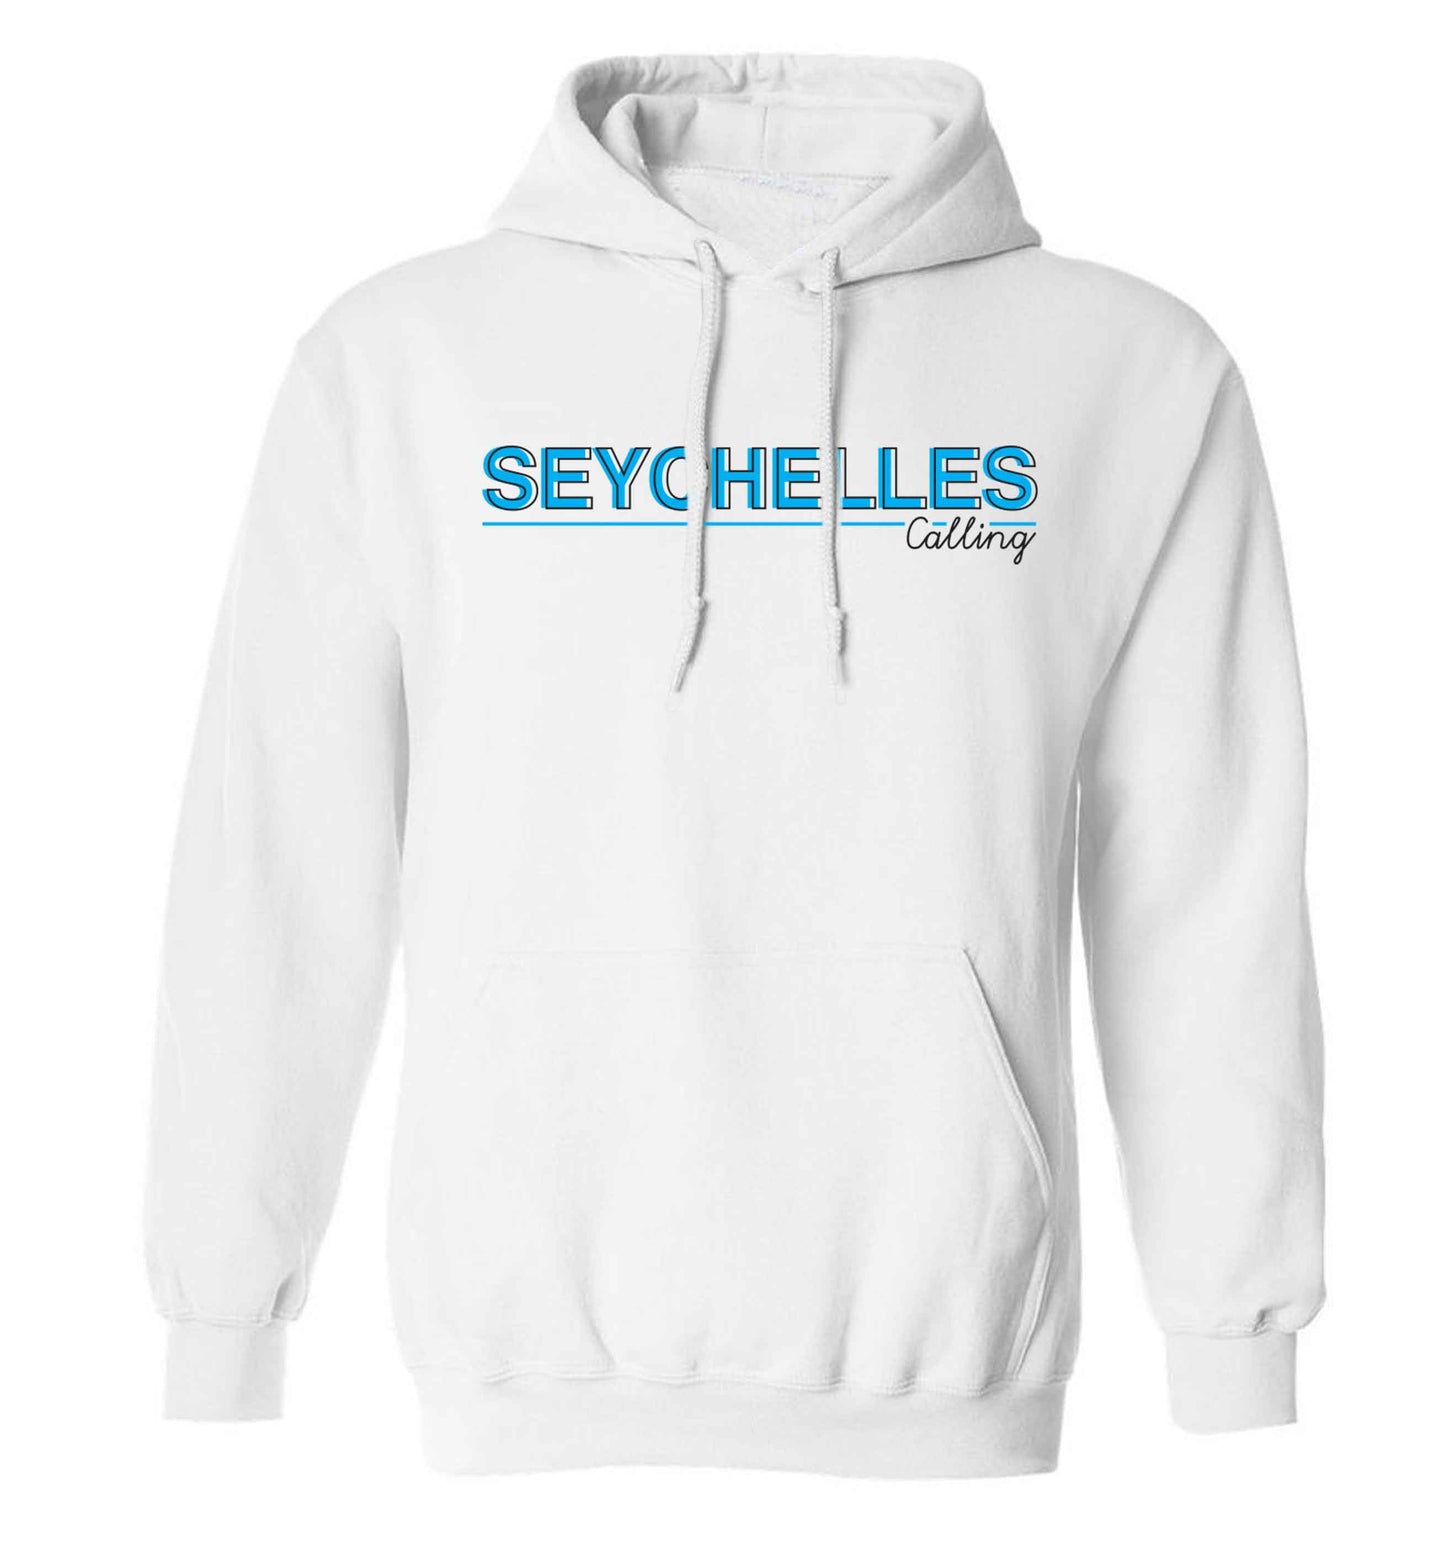 Seychelles calling adults unisex white hoodie 2XL